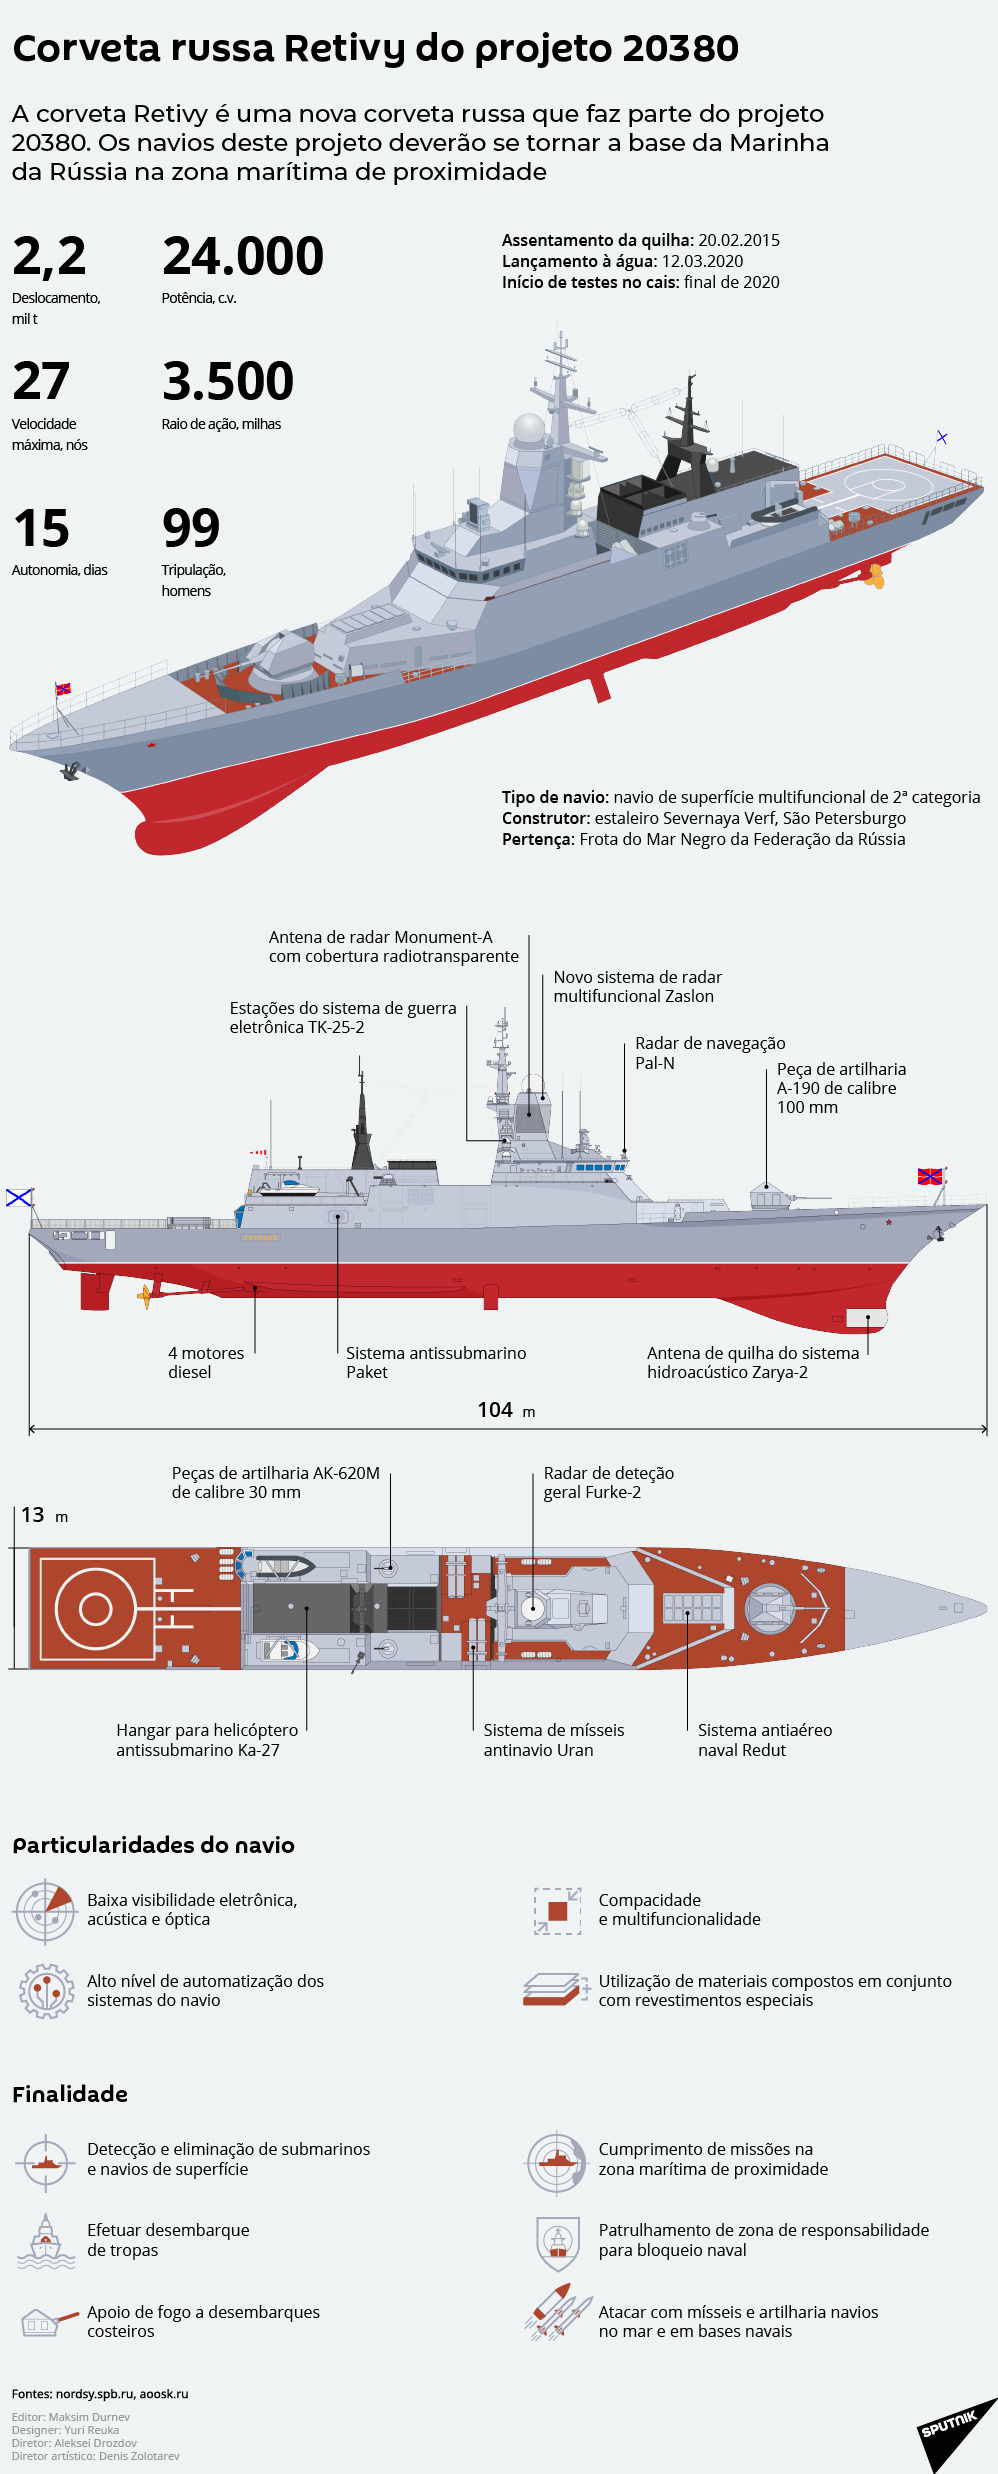 Novíssima corveta russa do projeto Retivy - Sputnik Brasil